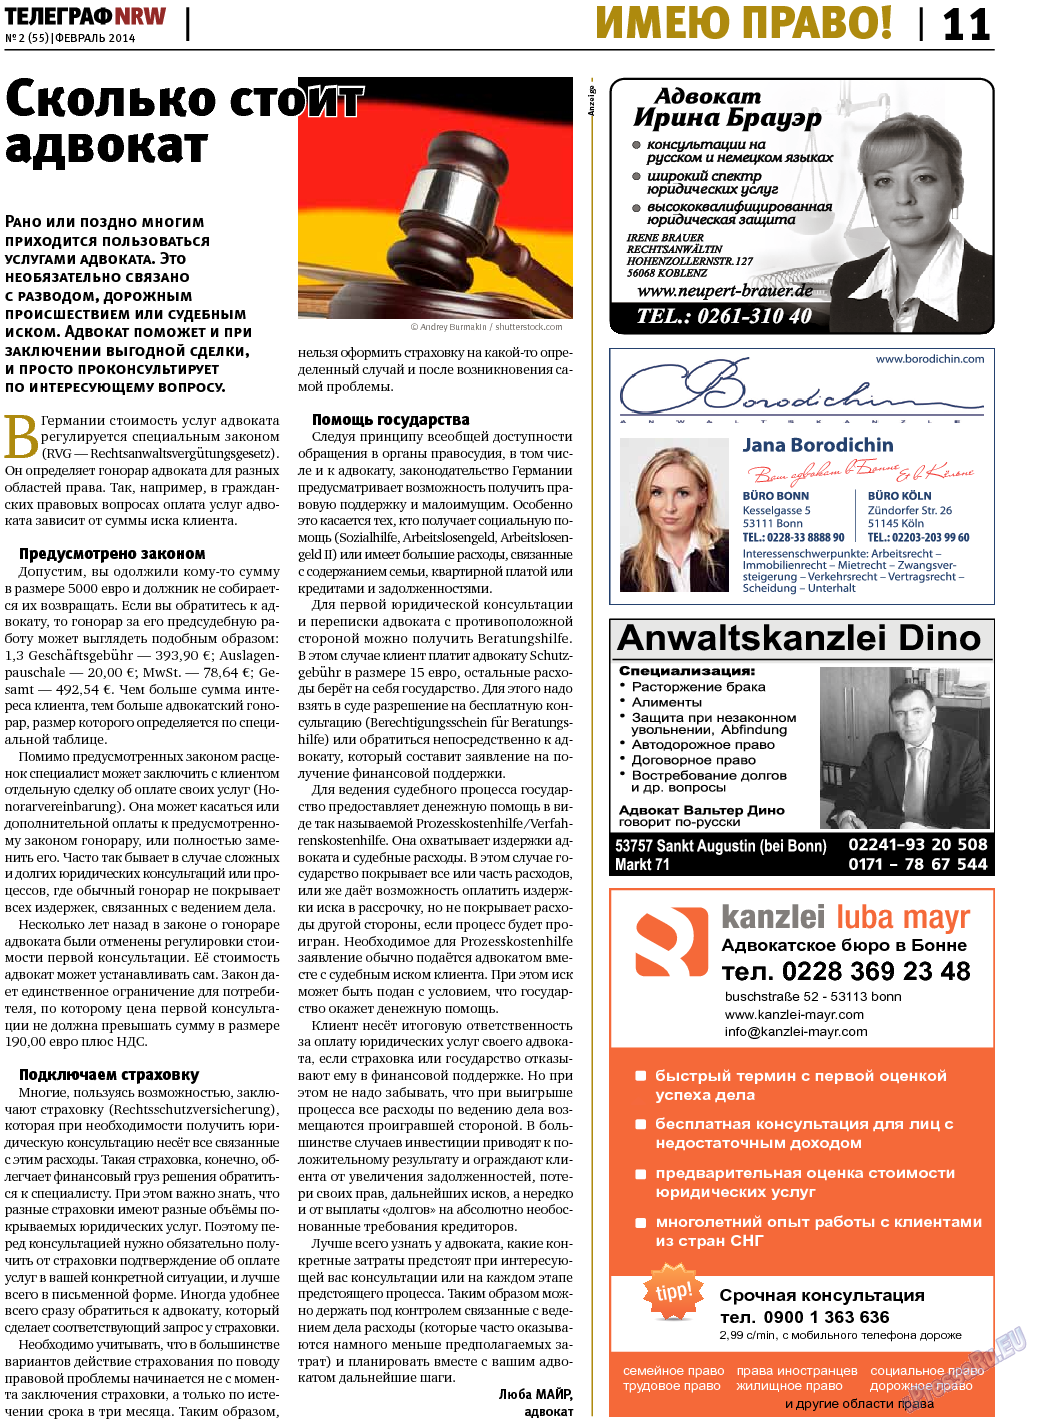 Телеграф NRW, газета. 2014 №2 стр.11